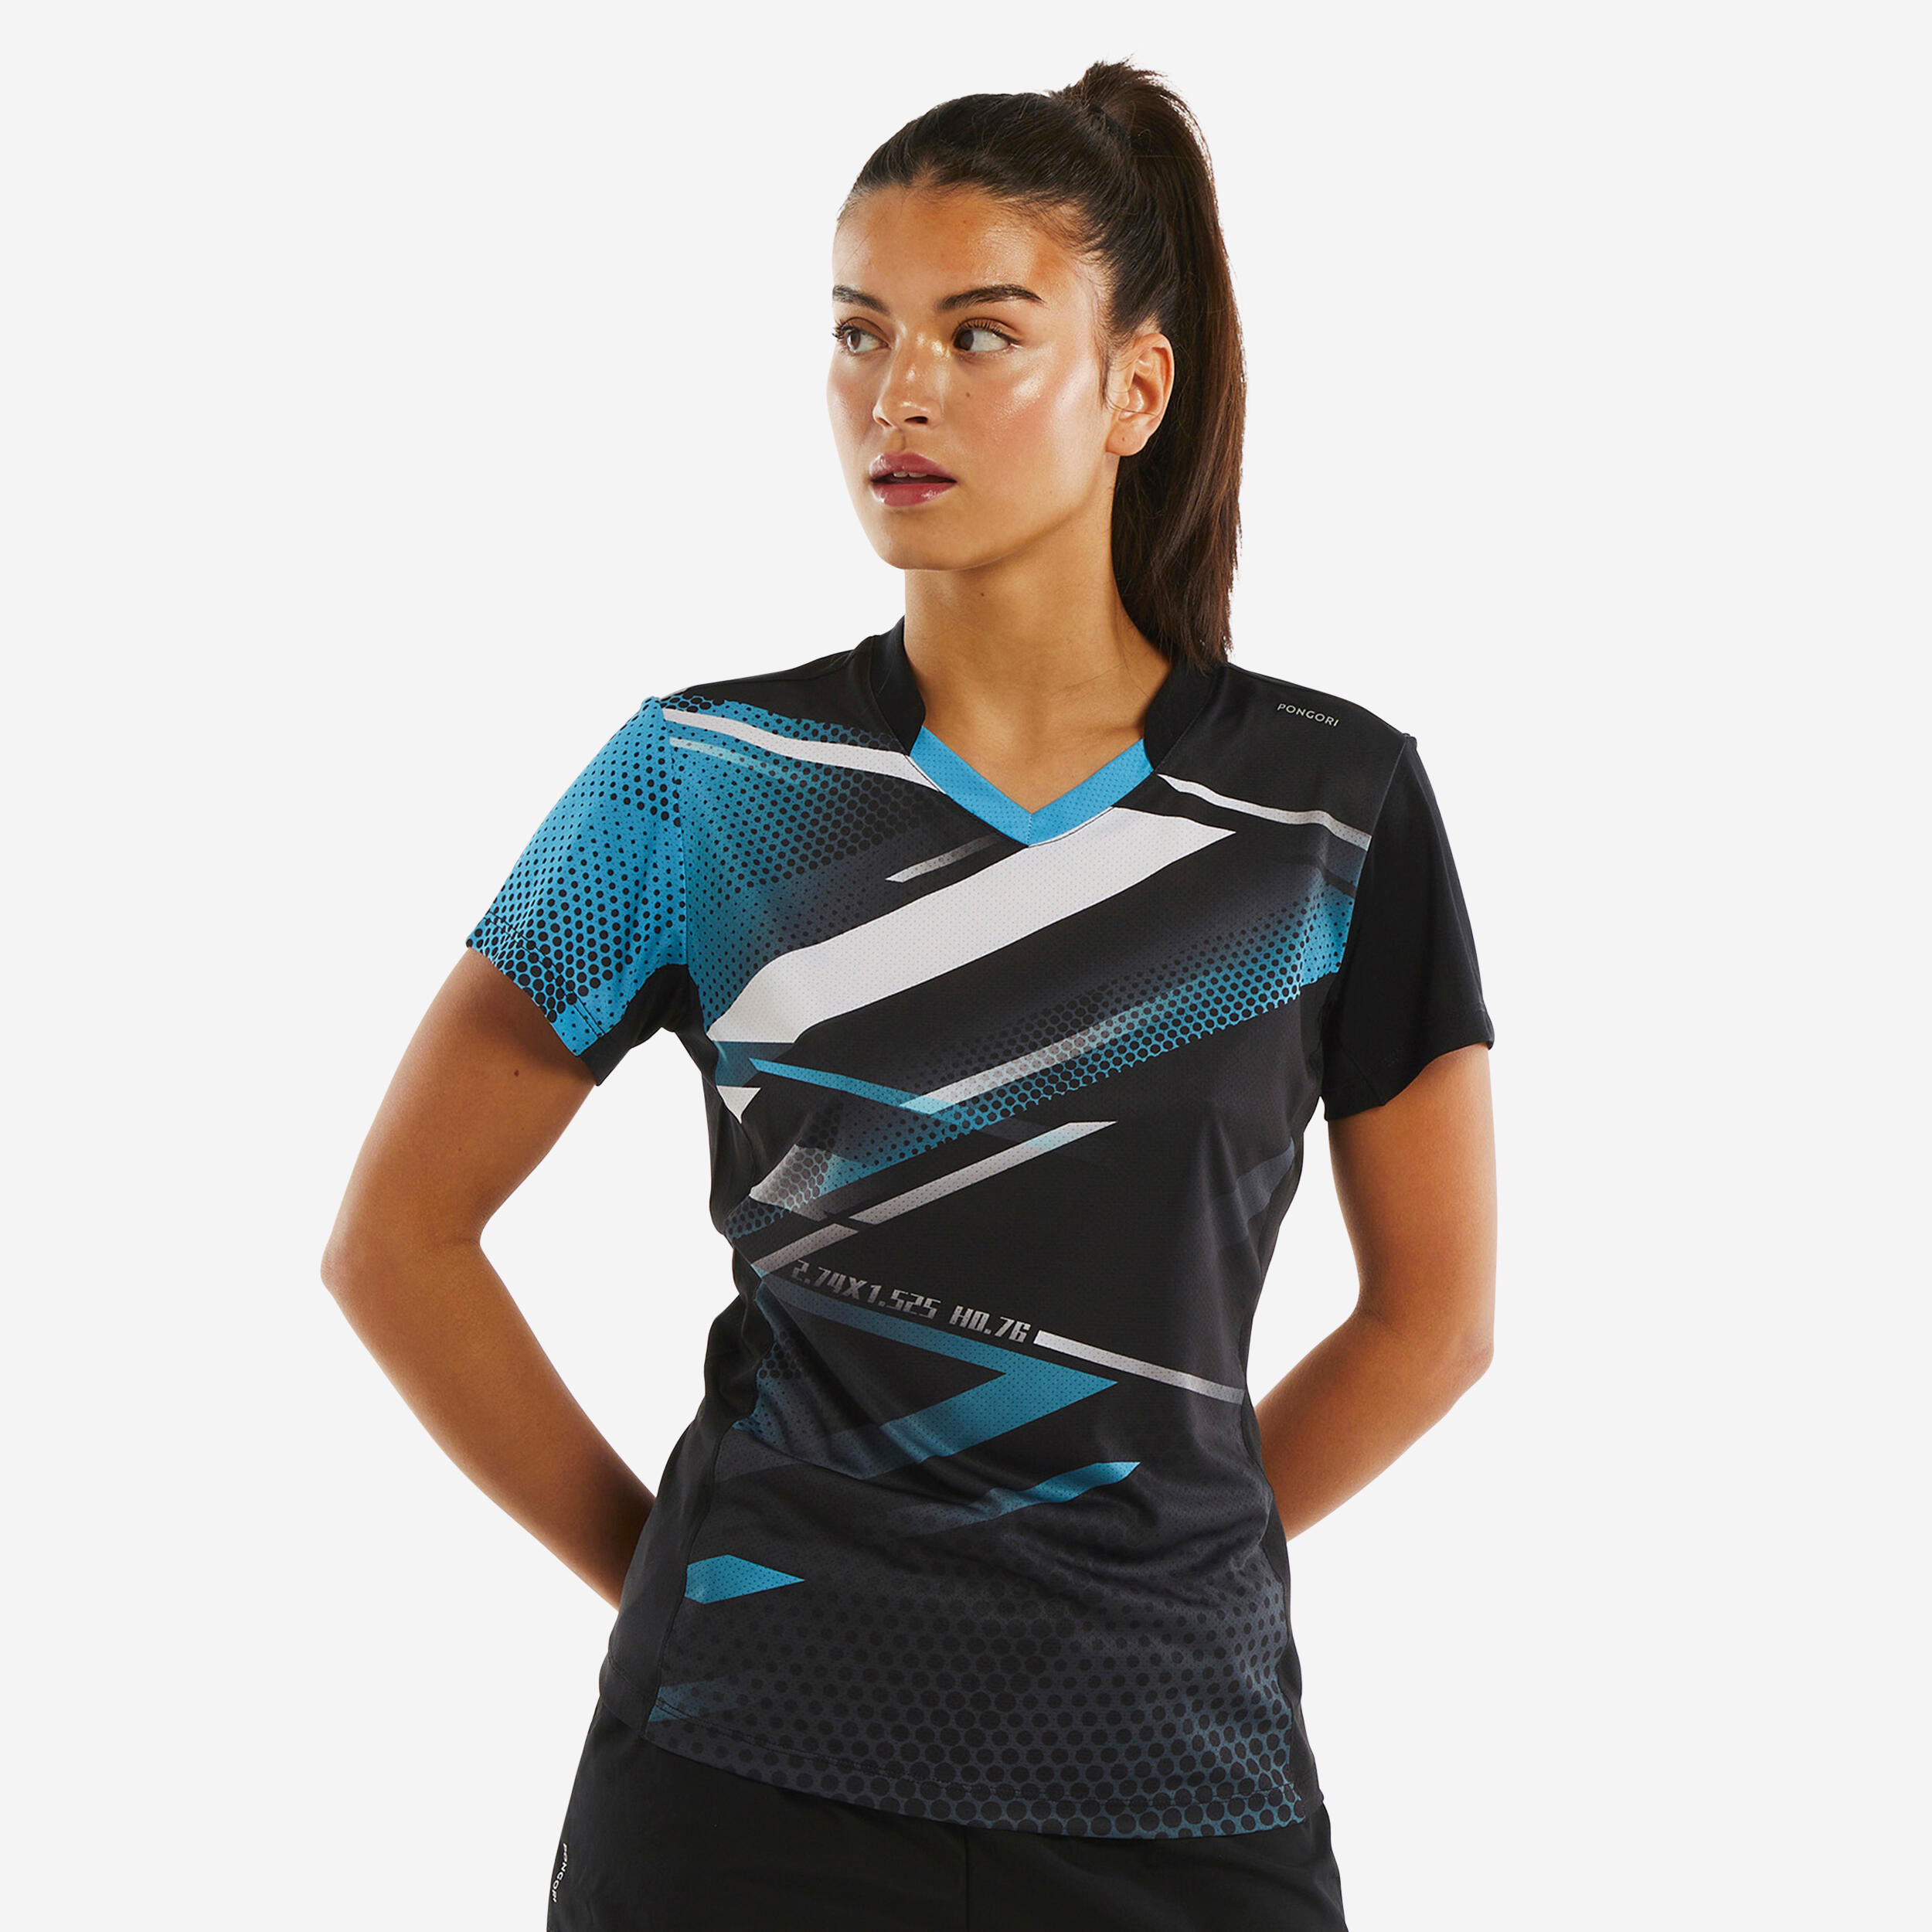 PONGORI Women's Table Tennis T-Shirt TTP560 - Black/Blue